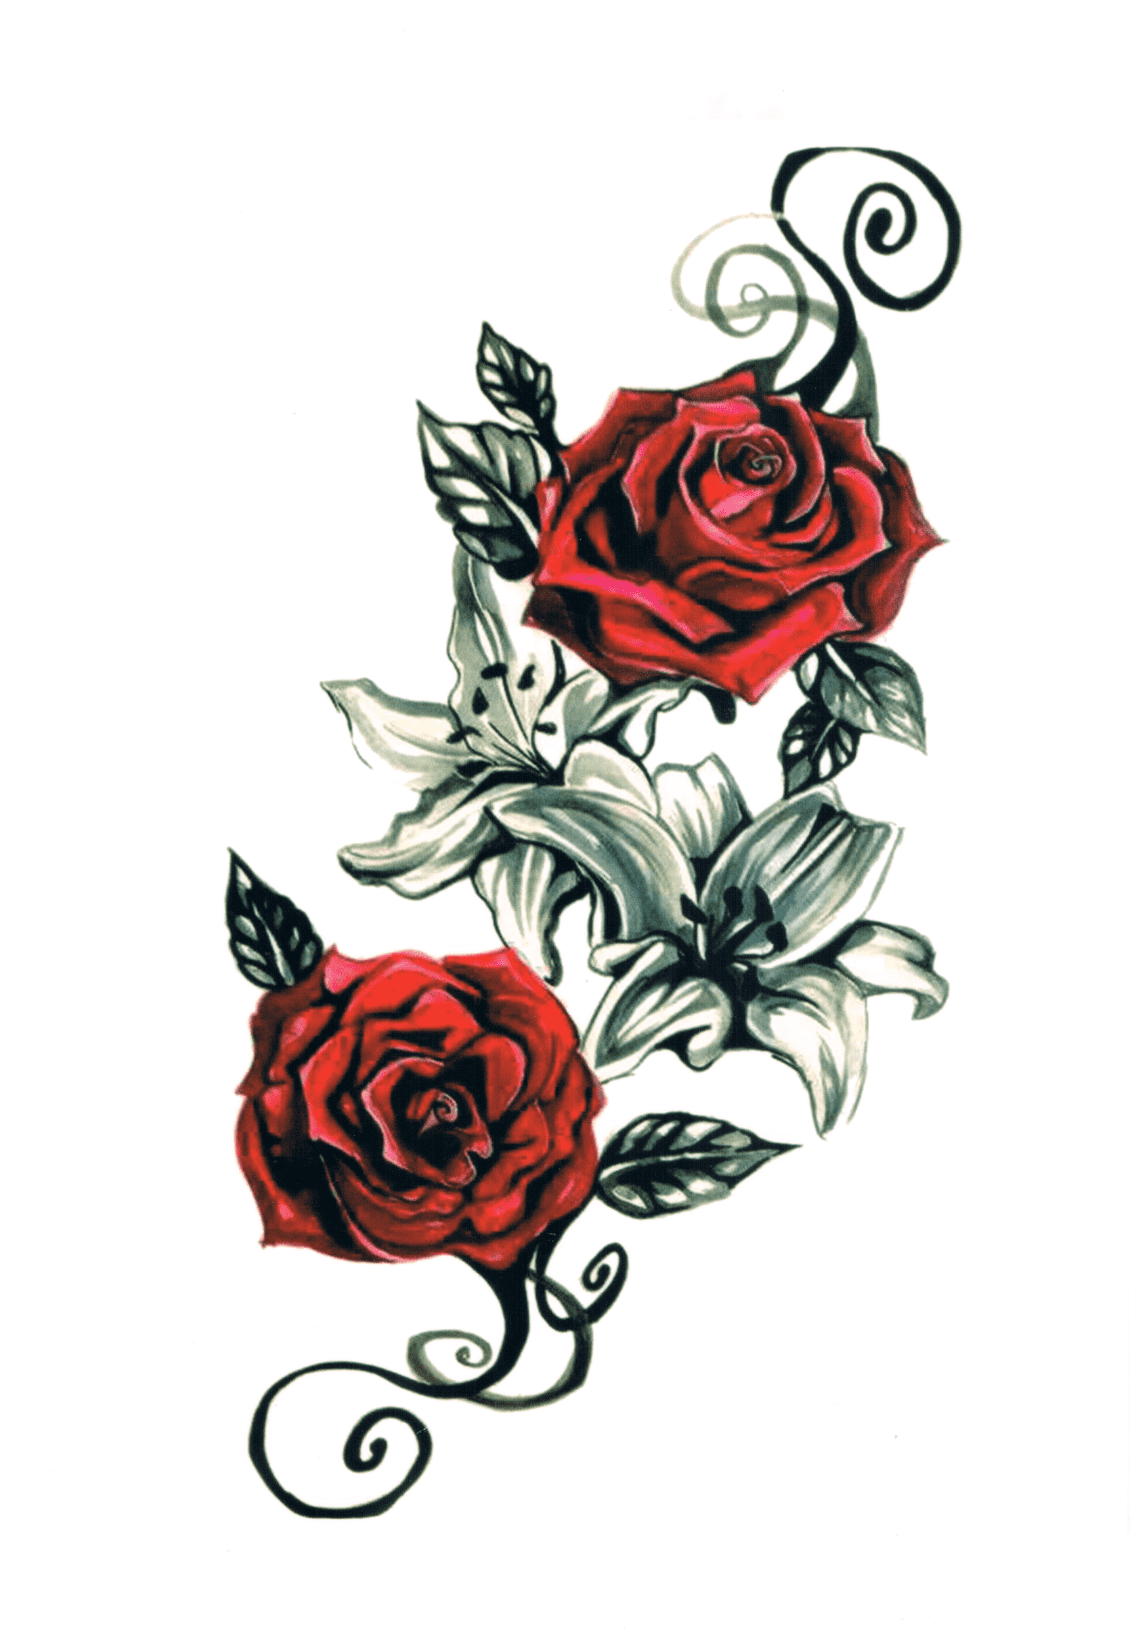 Duo de roses